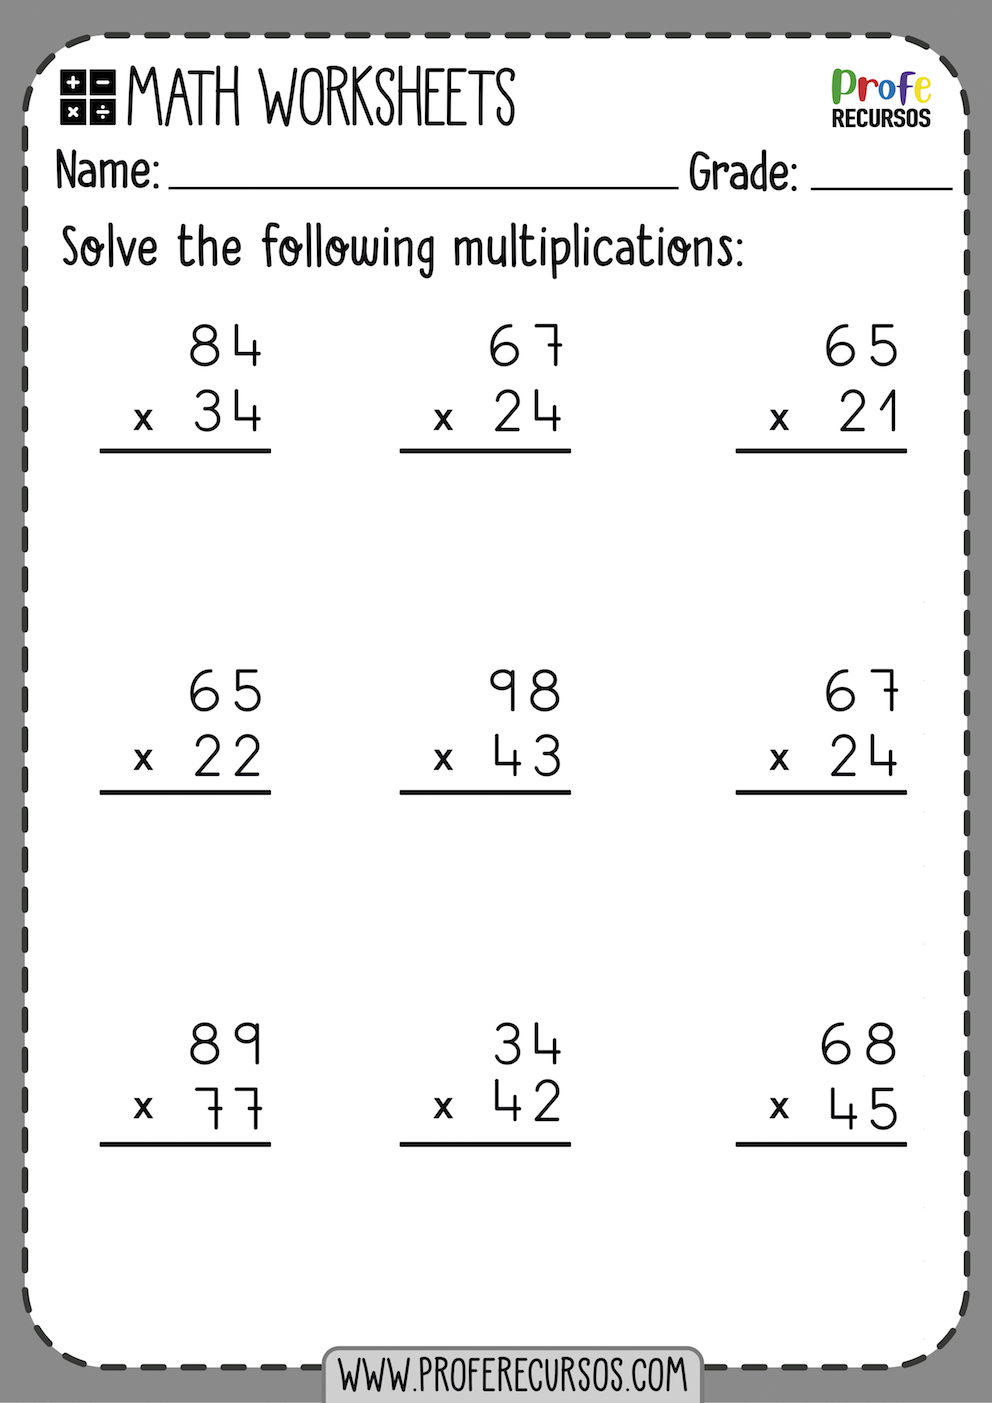 Multiplication Table 2 Worksheet Pdf